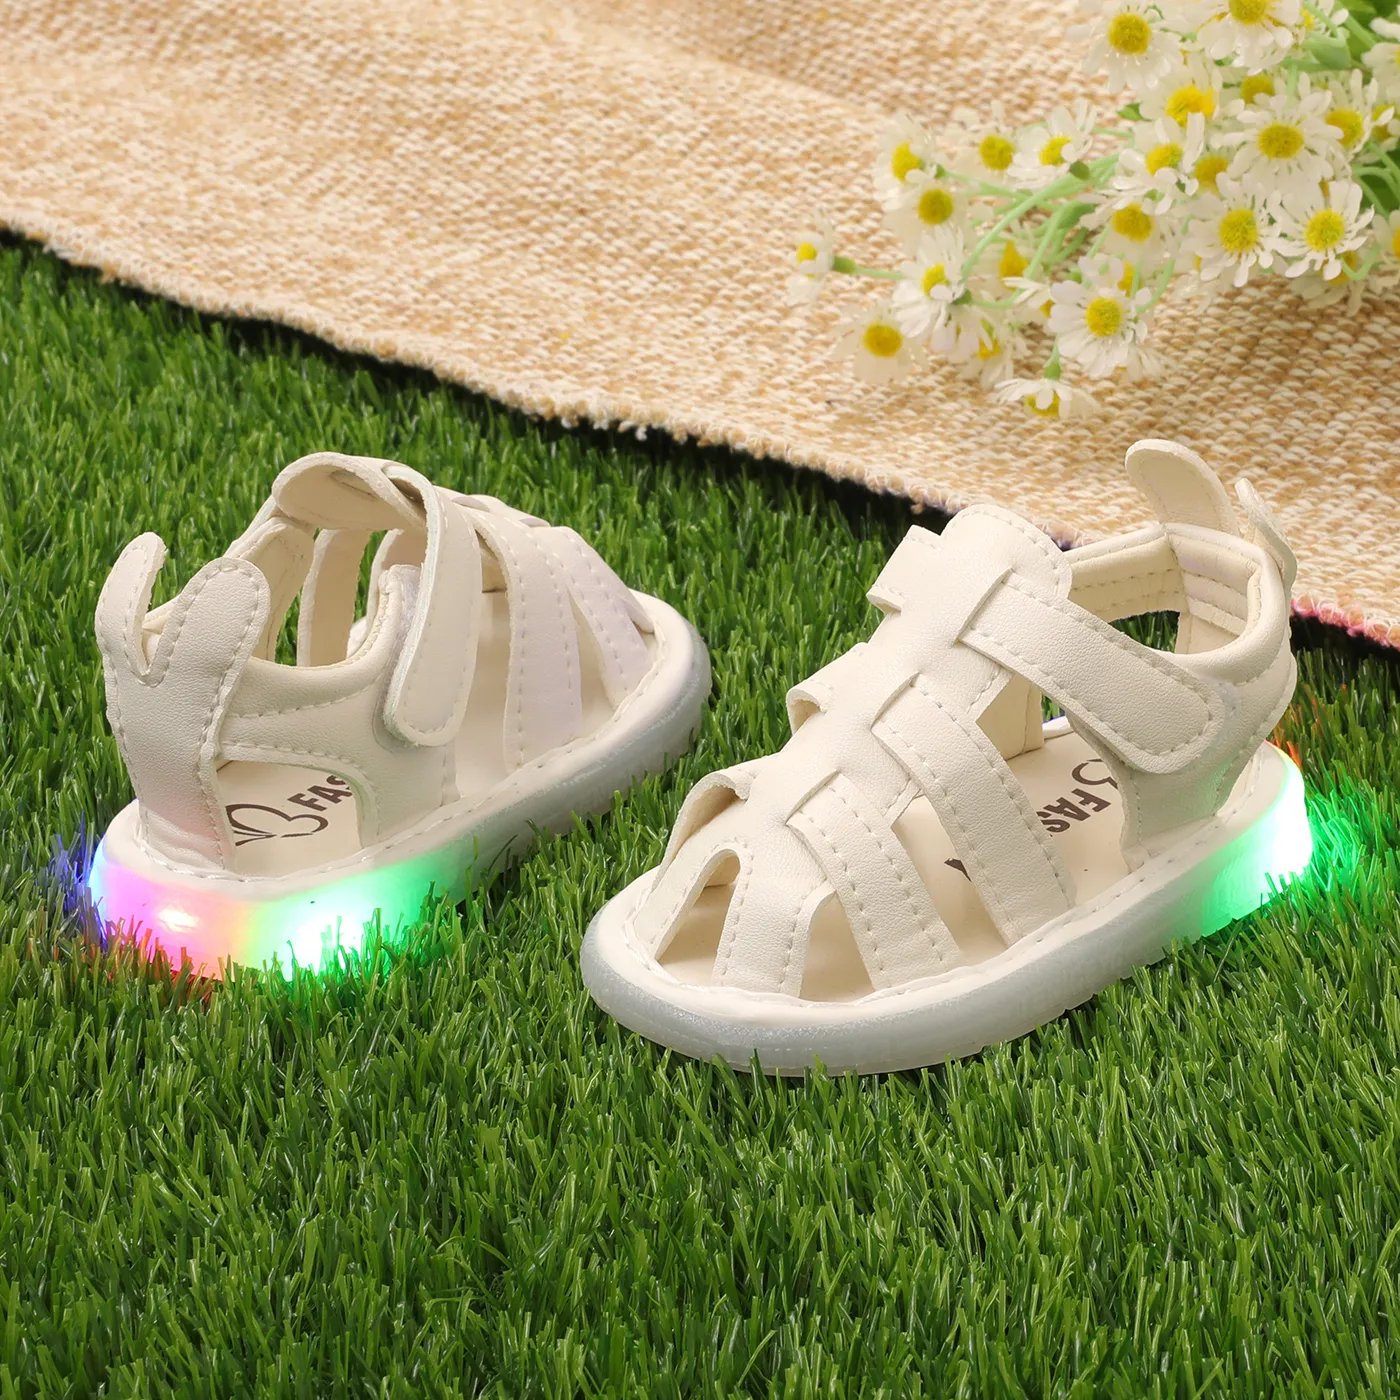 Baby/Toddler Luminous Casual Toddler Sandals